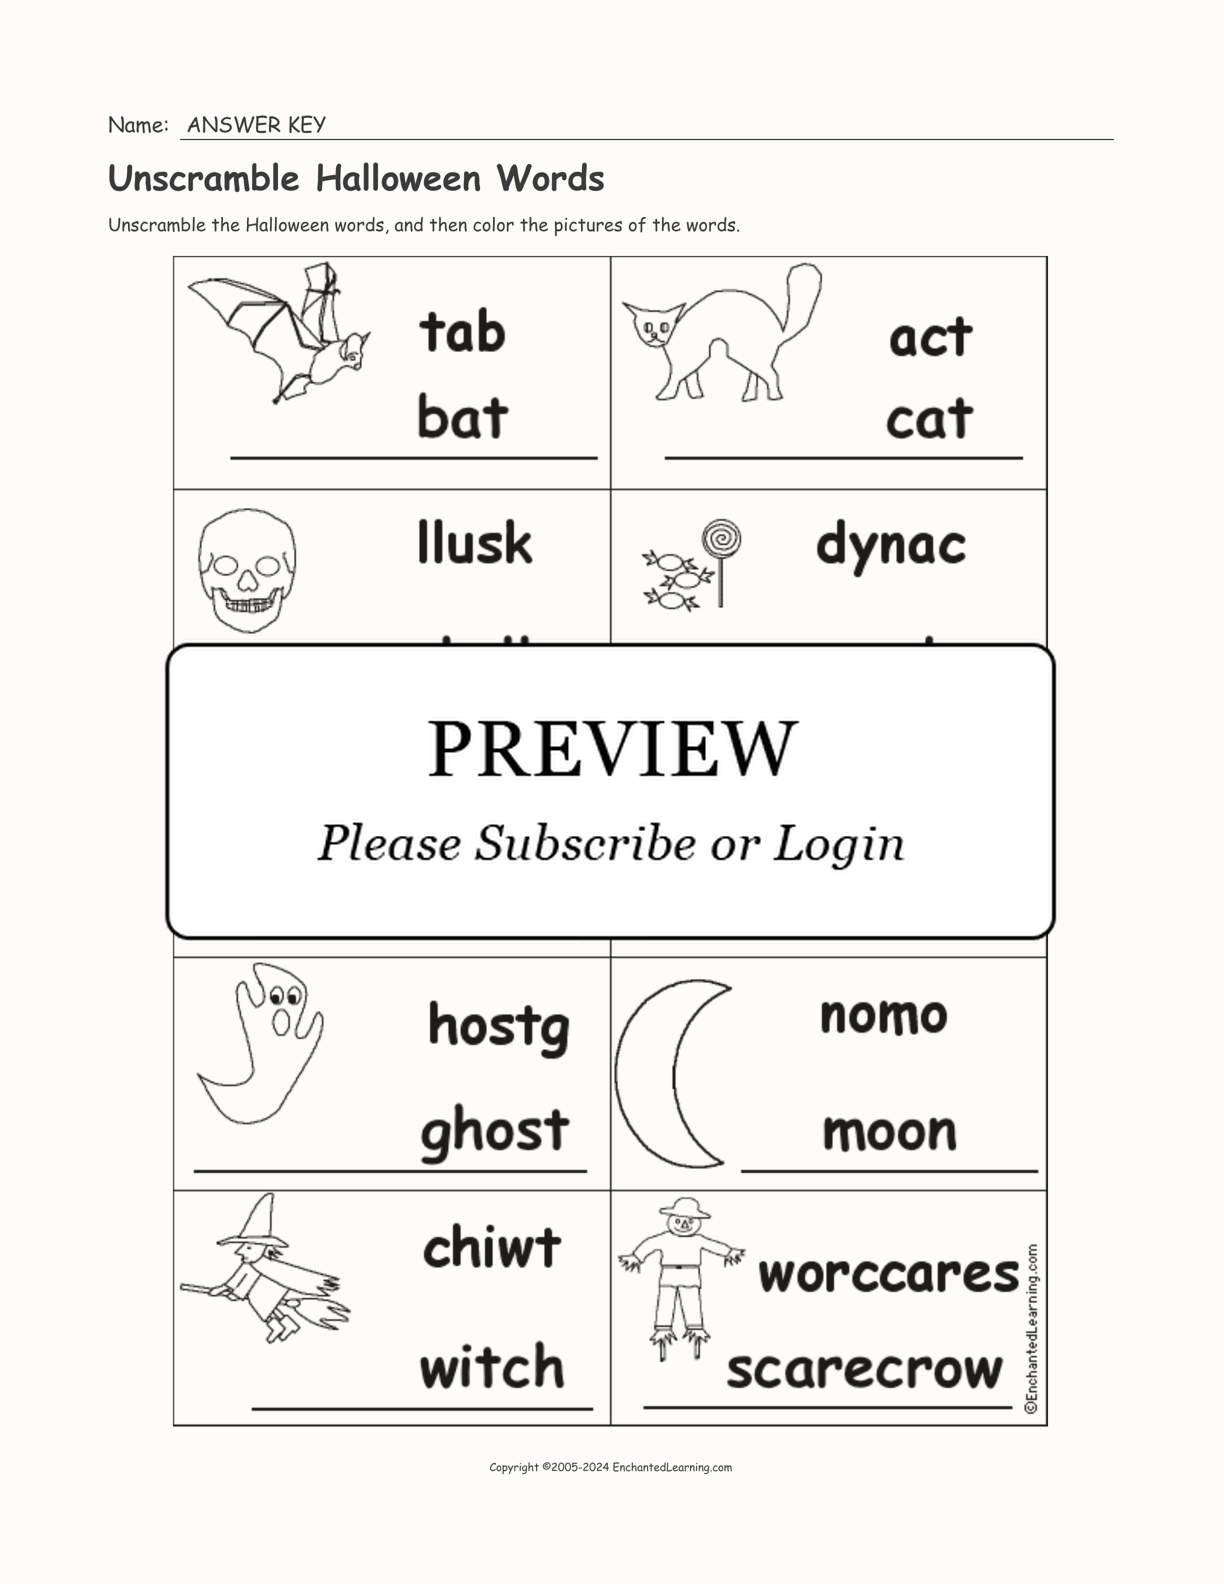 Unscramble Halloween Words interactive worksheet page 2